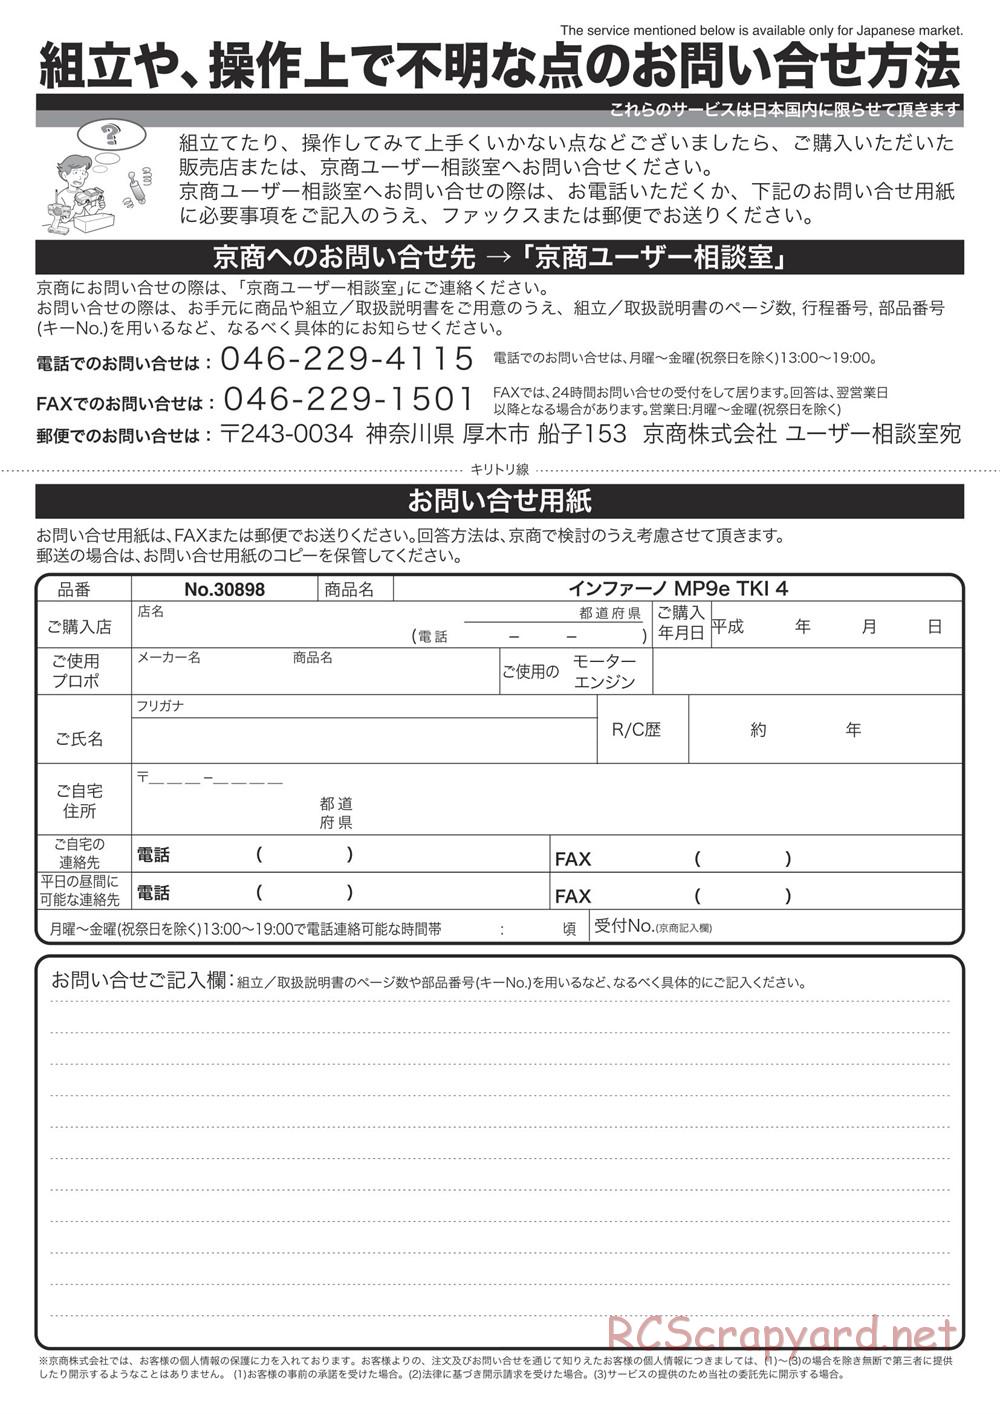 Kyosho - Inferno MP9e TKI4 - Manual - Page 54